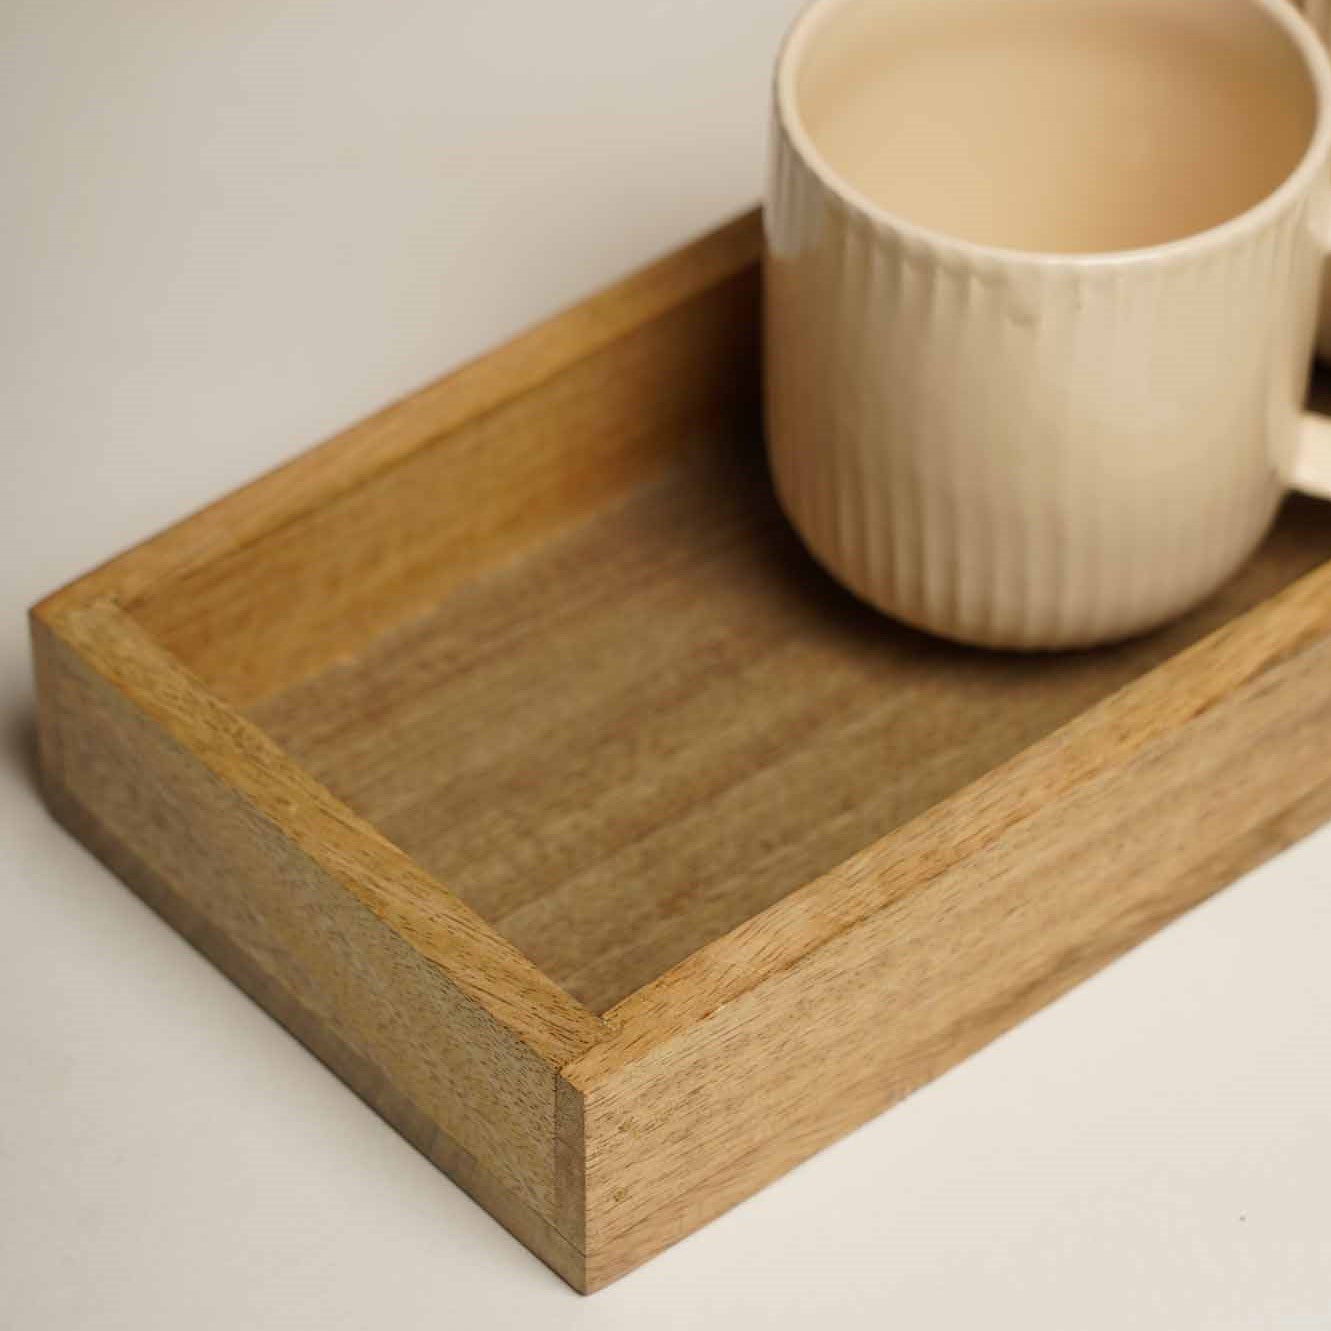 Classy Wooden Tray OR Desk/Kitchen Organiser